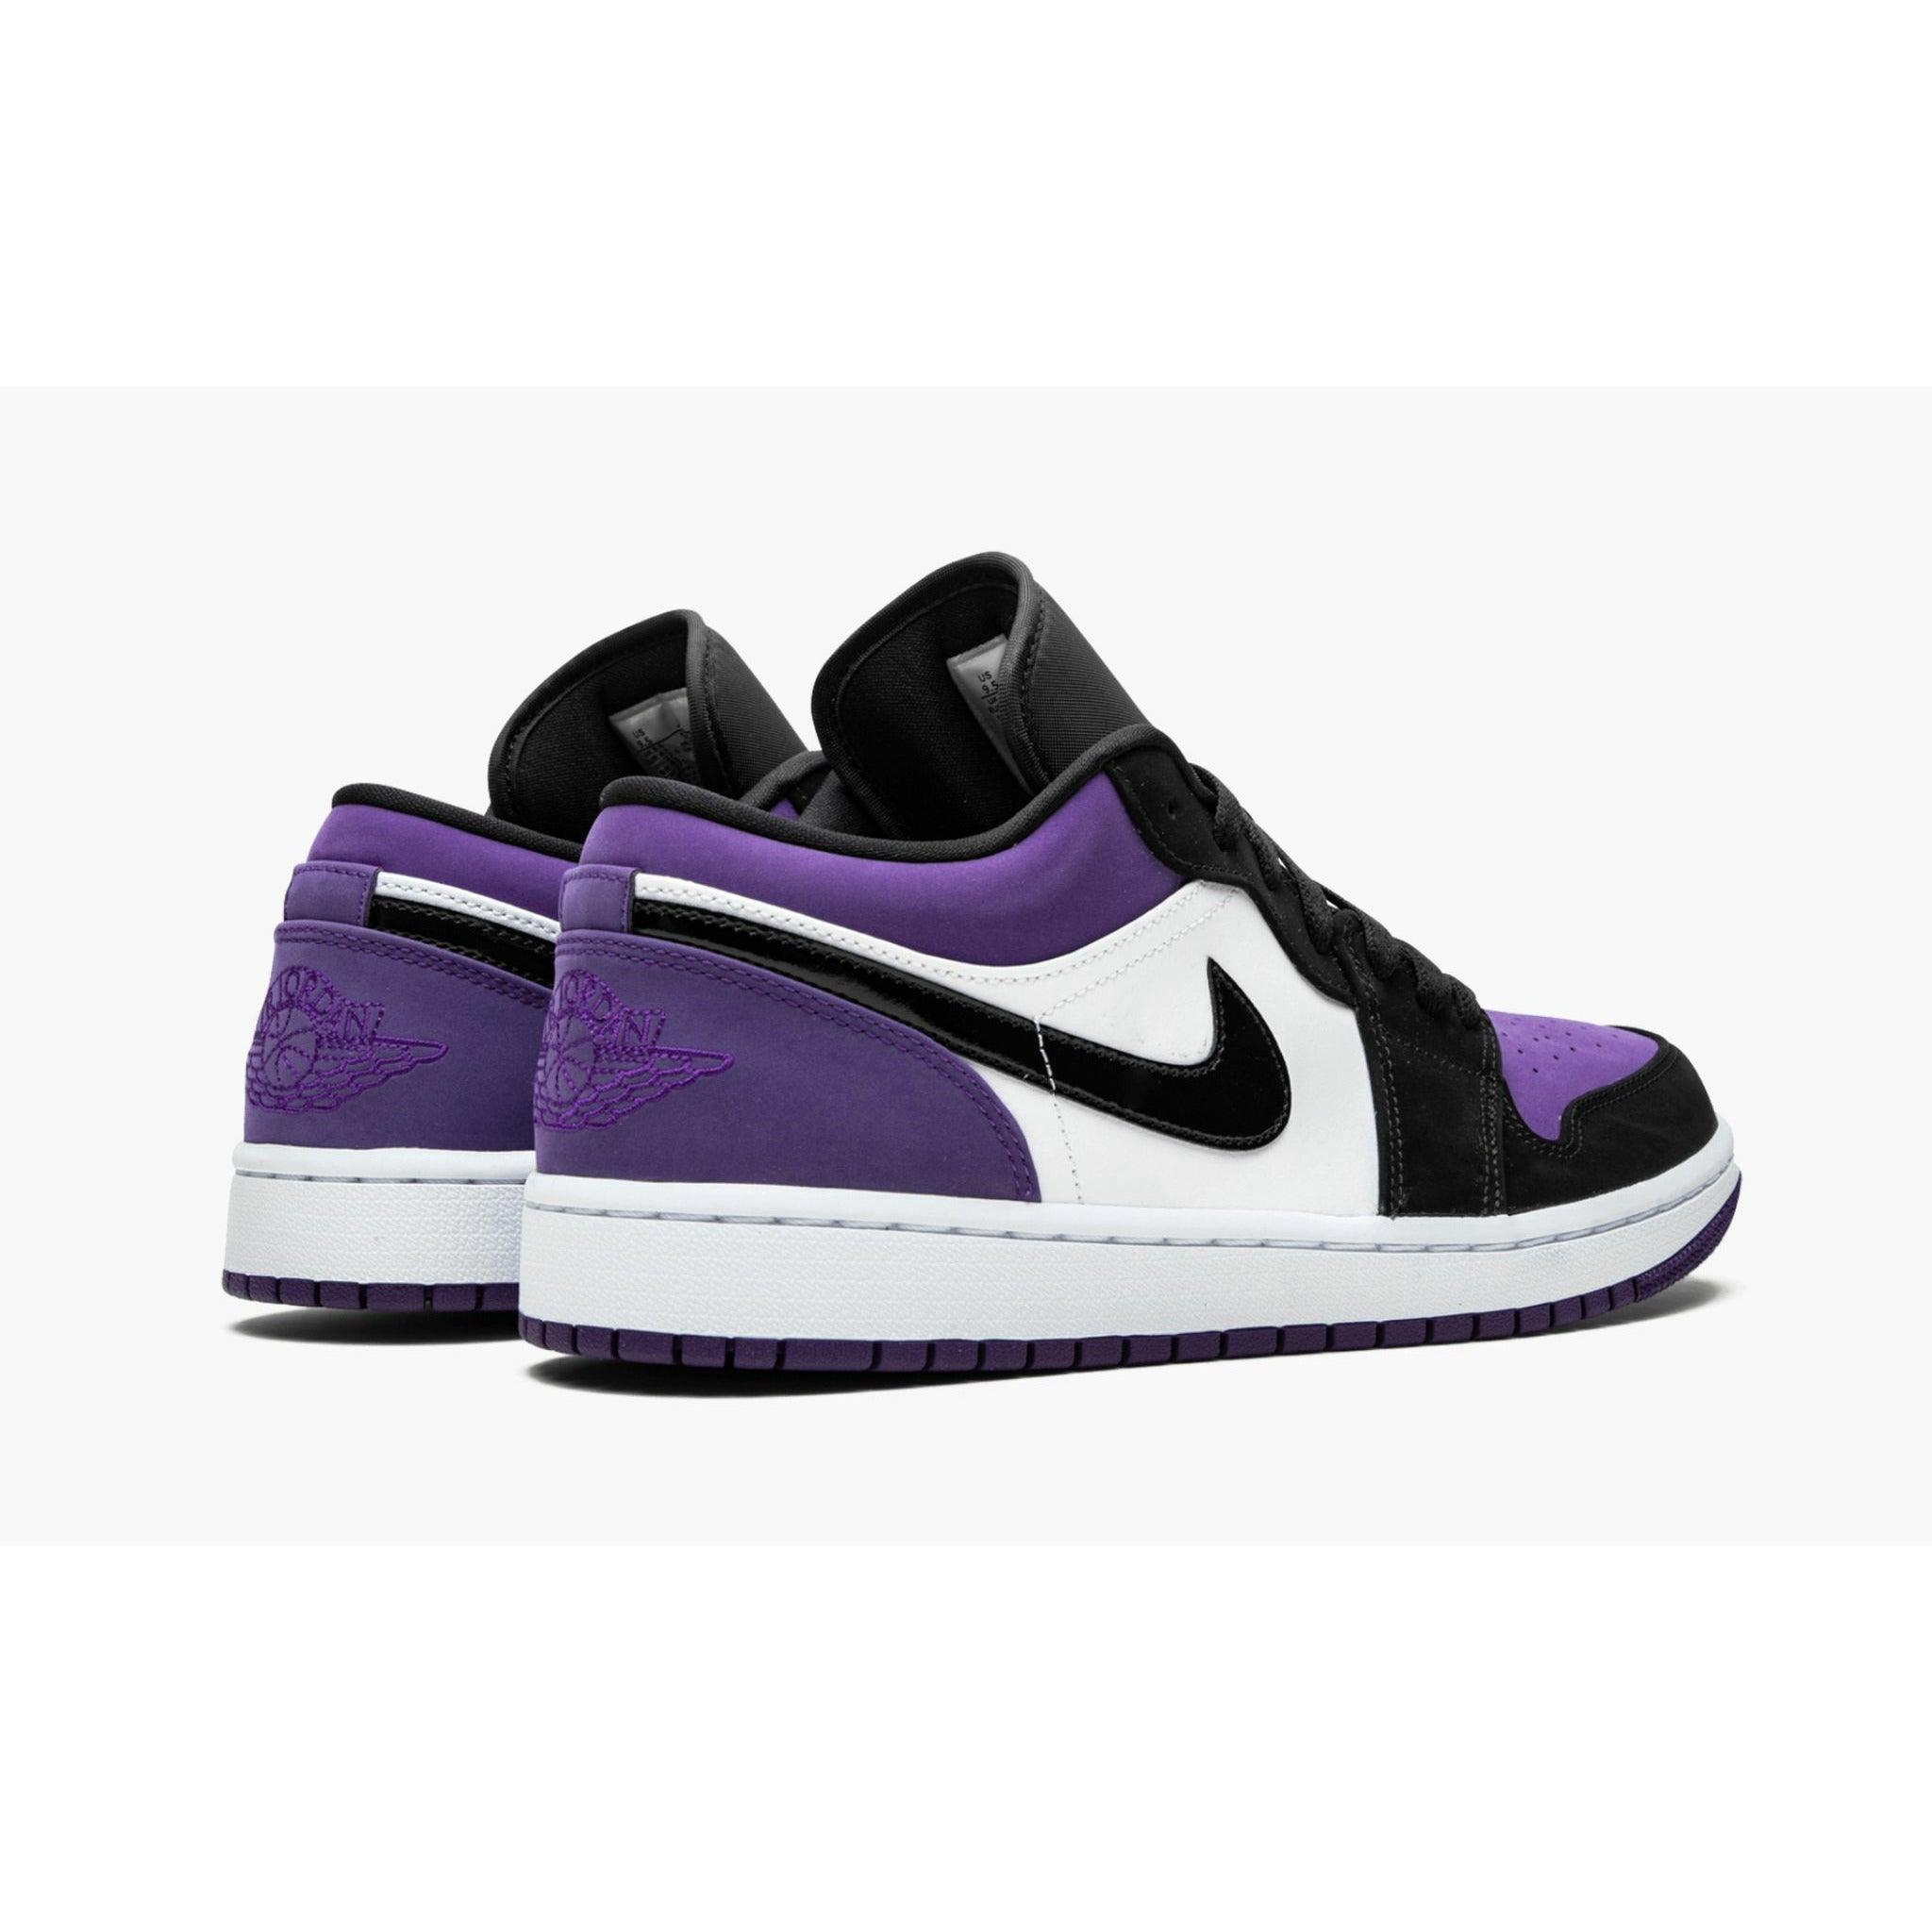 AIR JORDAN 1 LOW "Court Purple" - Plumas Kicks